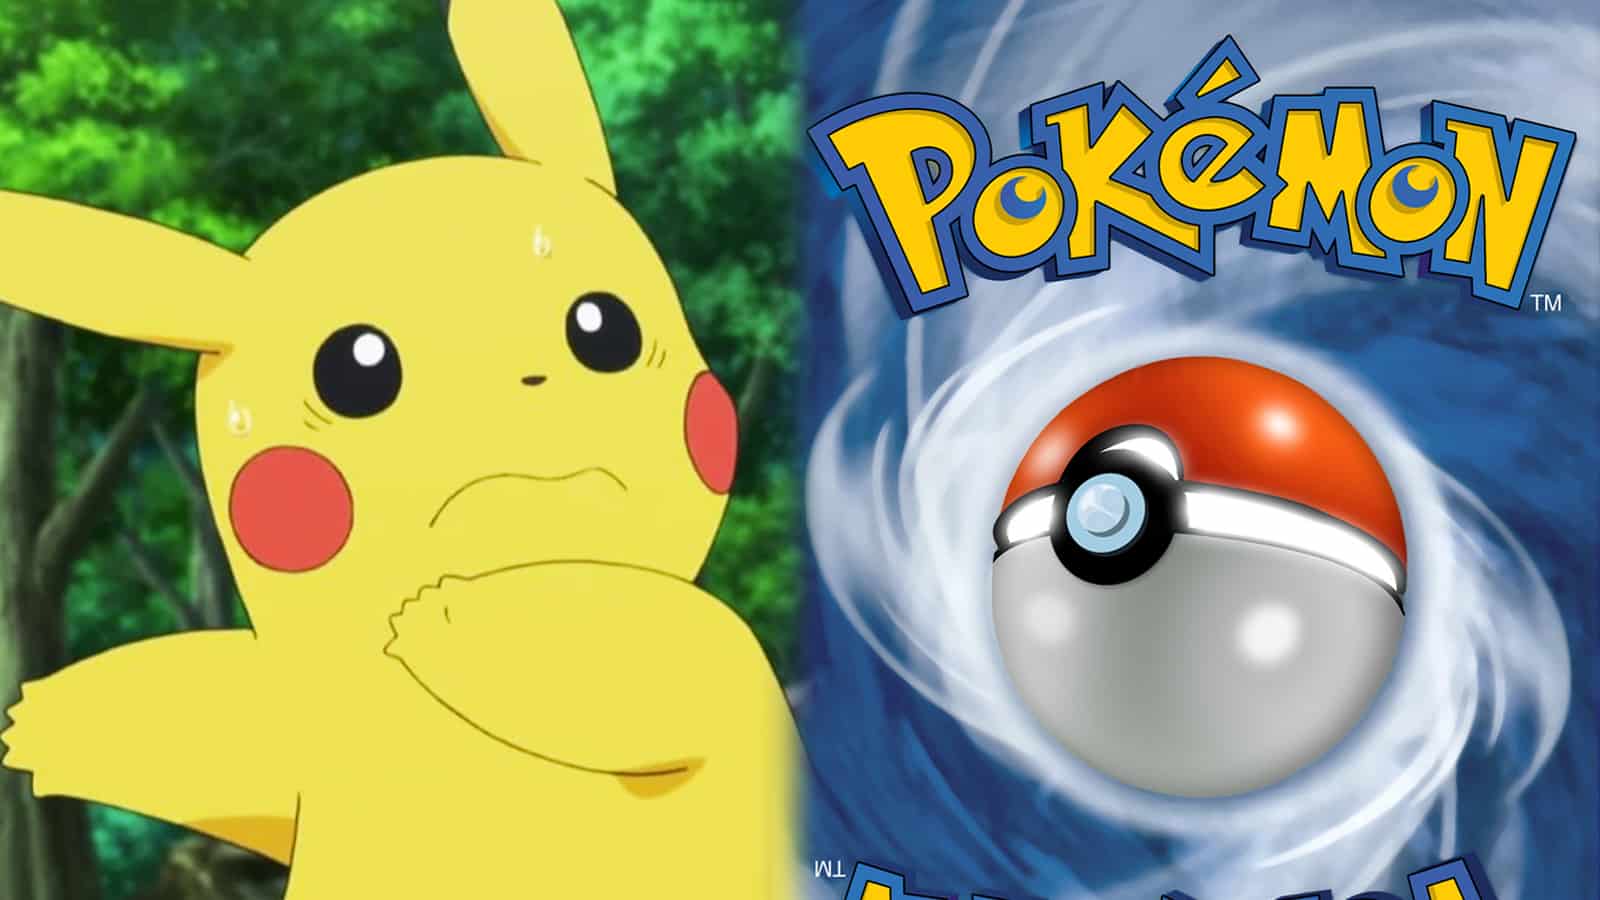 Pikachu Pokemon anime next to Pokemon Card back artwork screenshot.